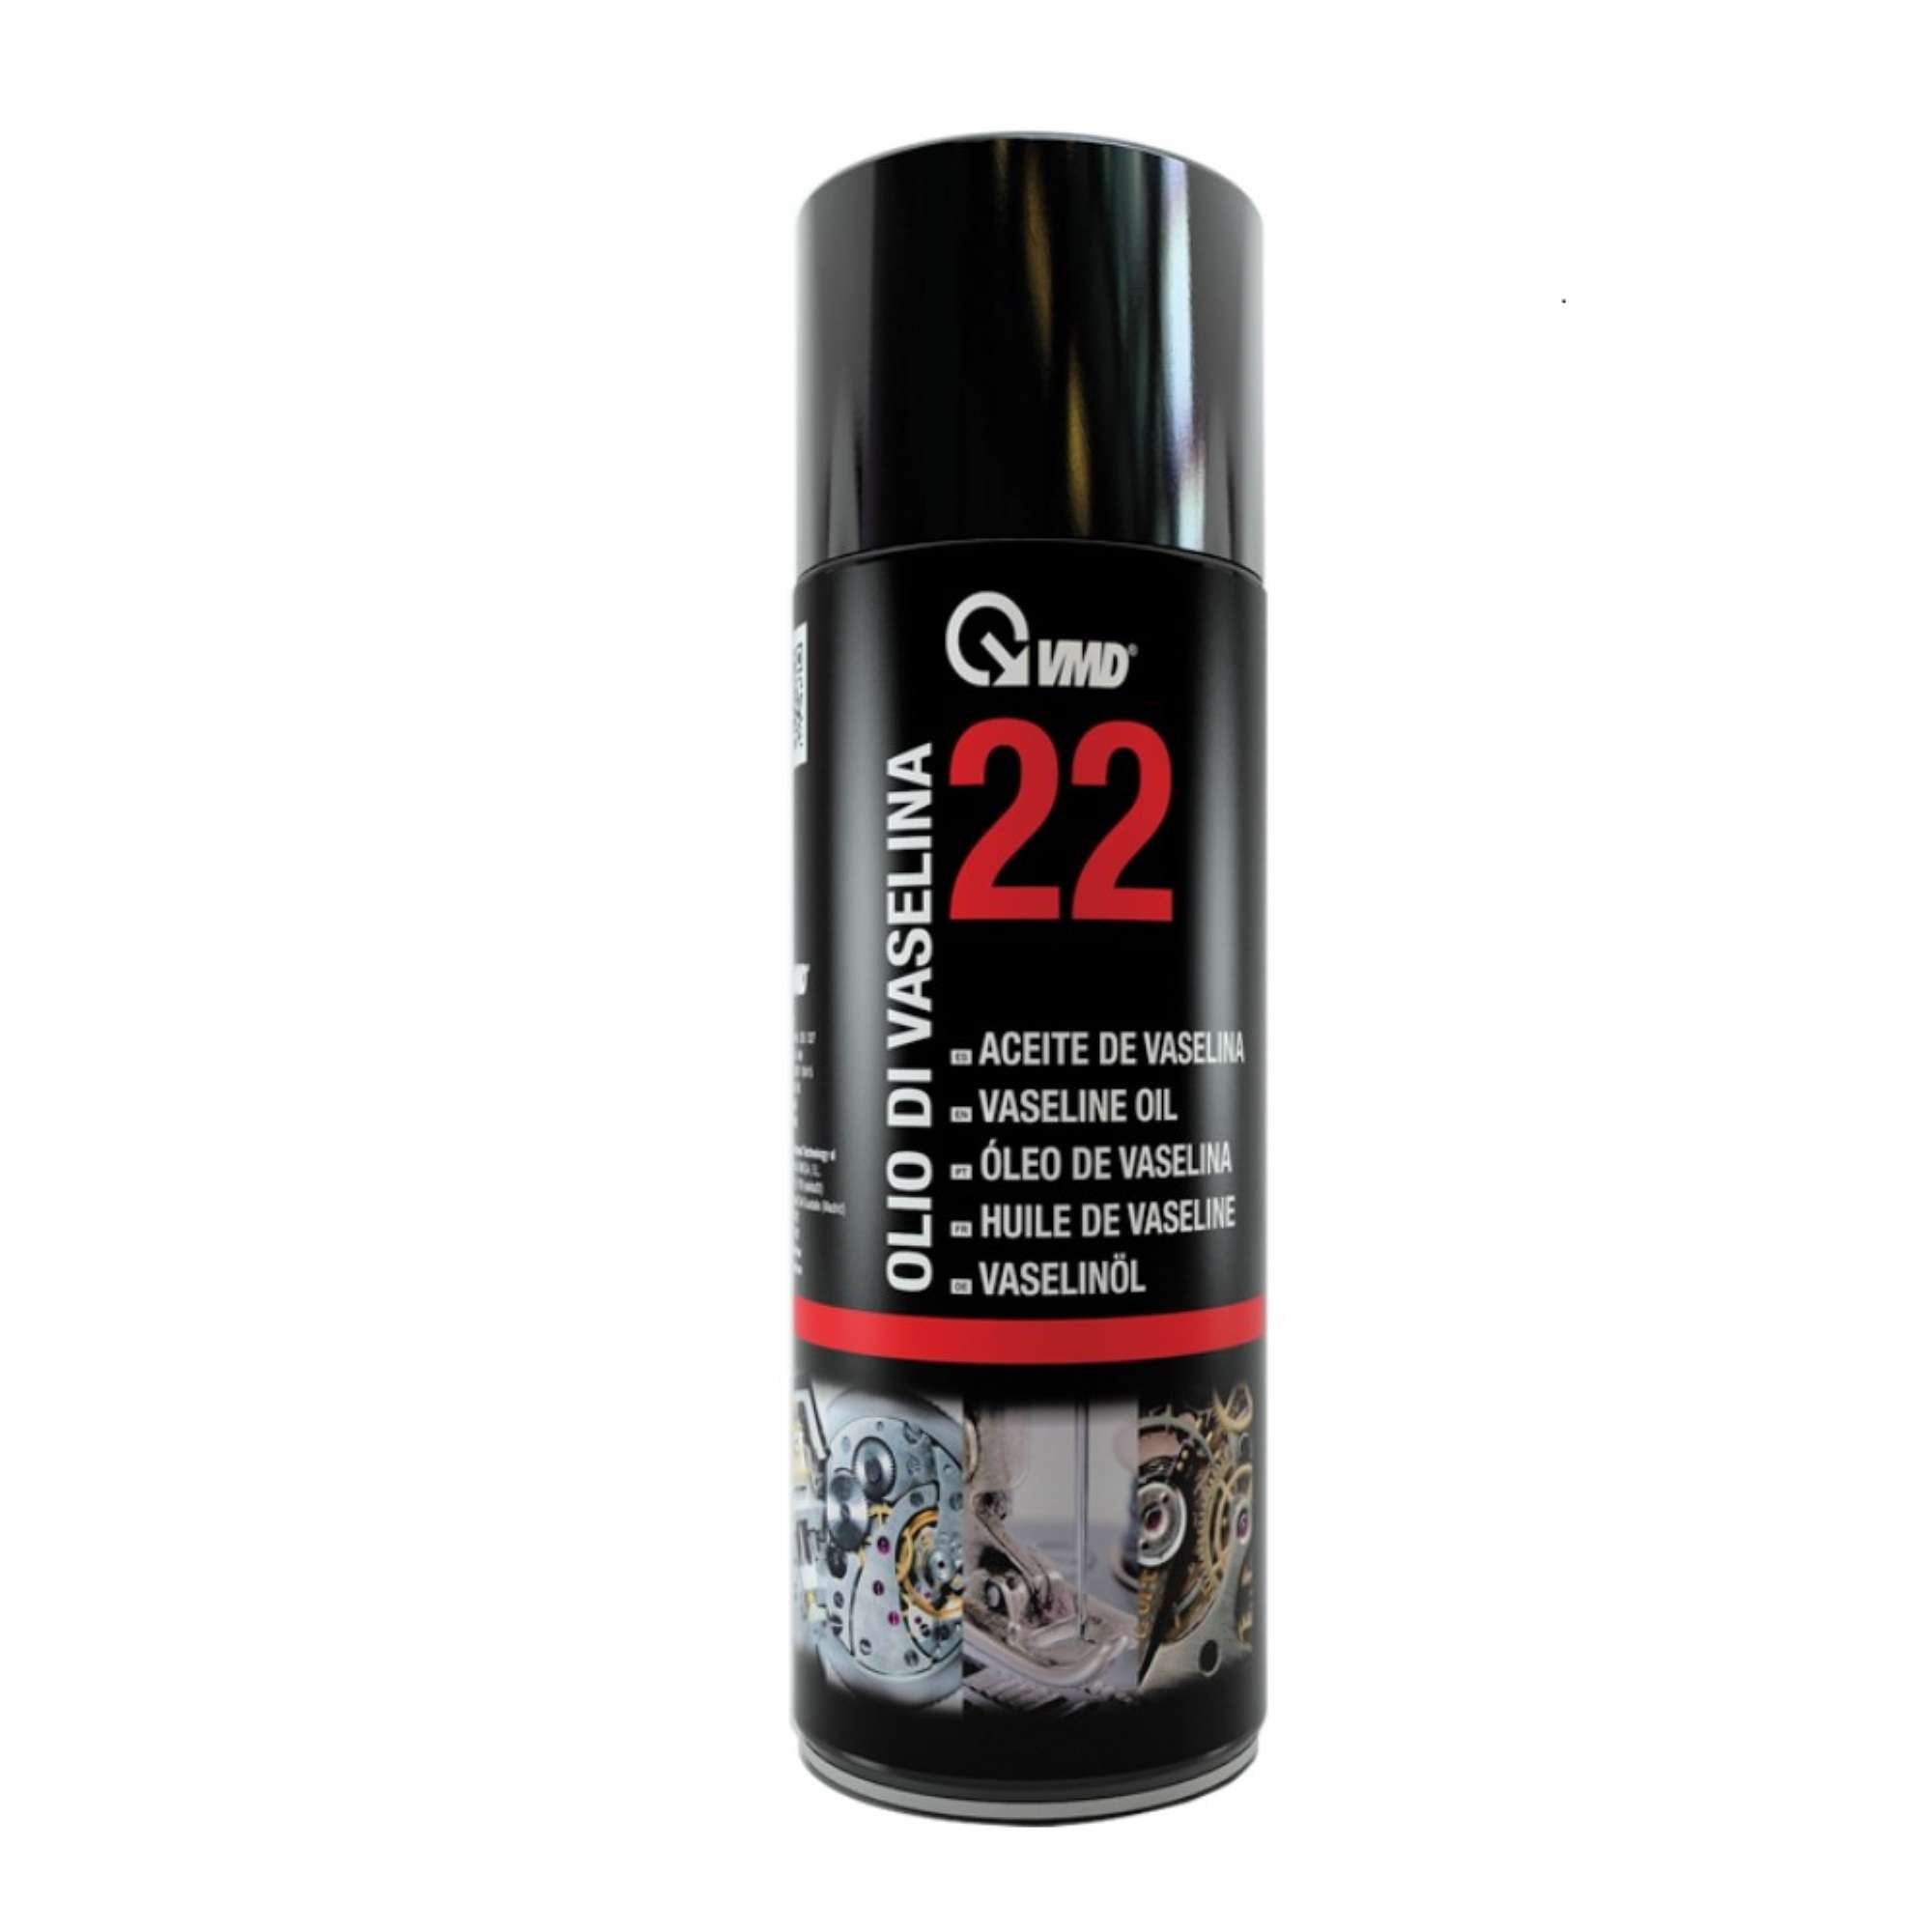 Vaseline oil spray 400ml - VMD 22